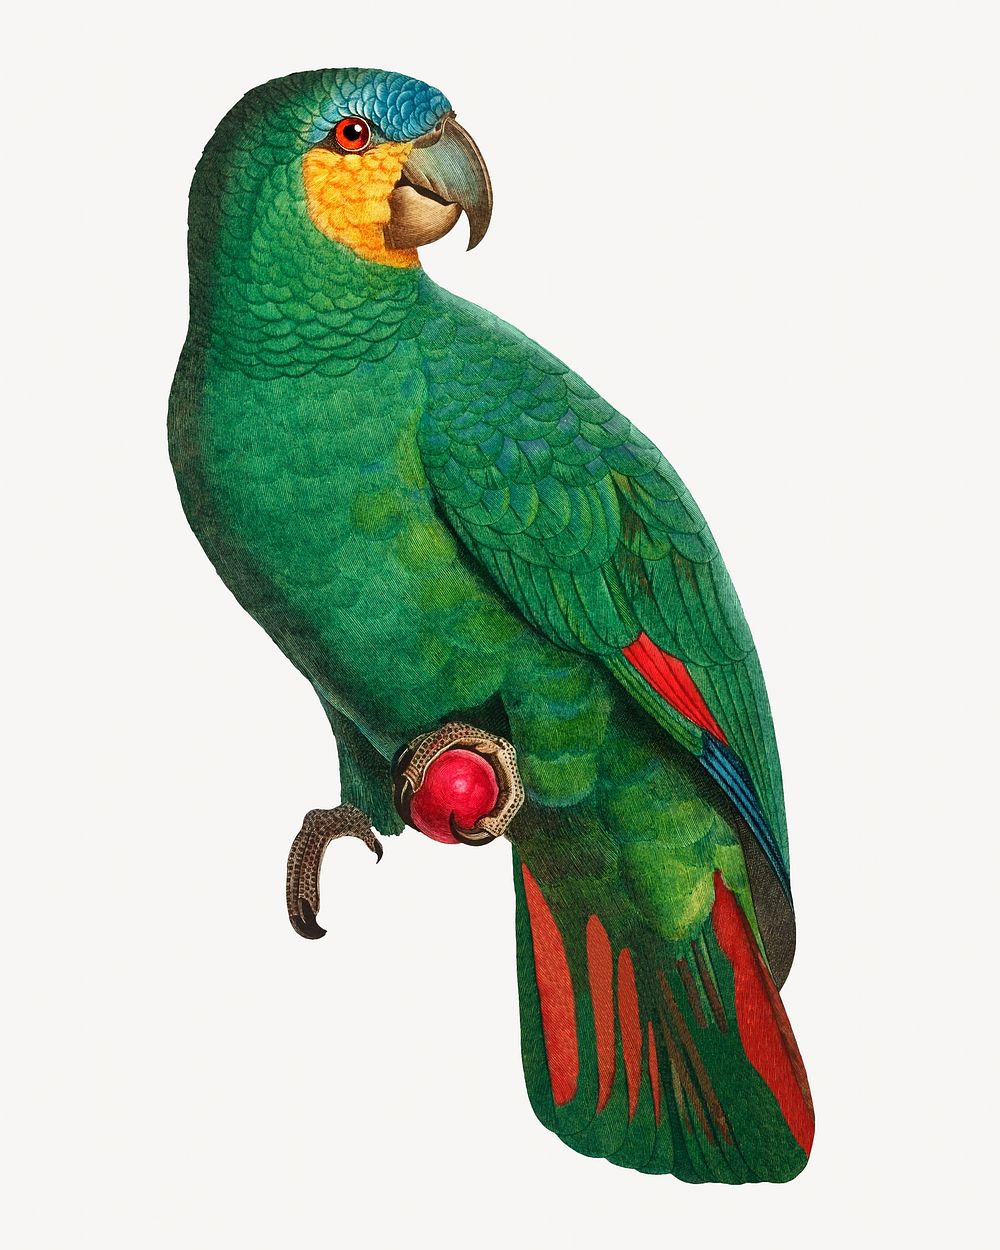 Orange-winged Amazon parrot bird, vintage animal illustration